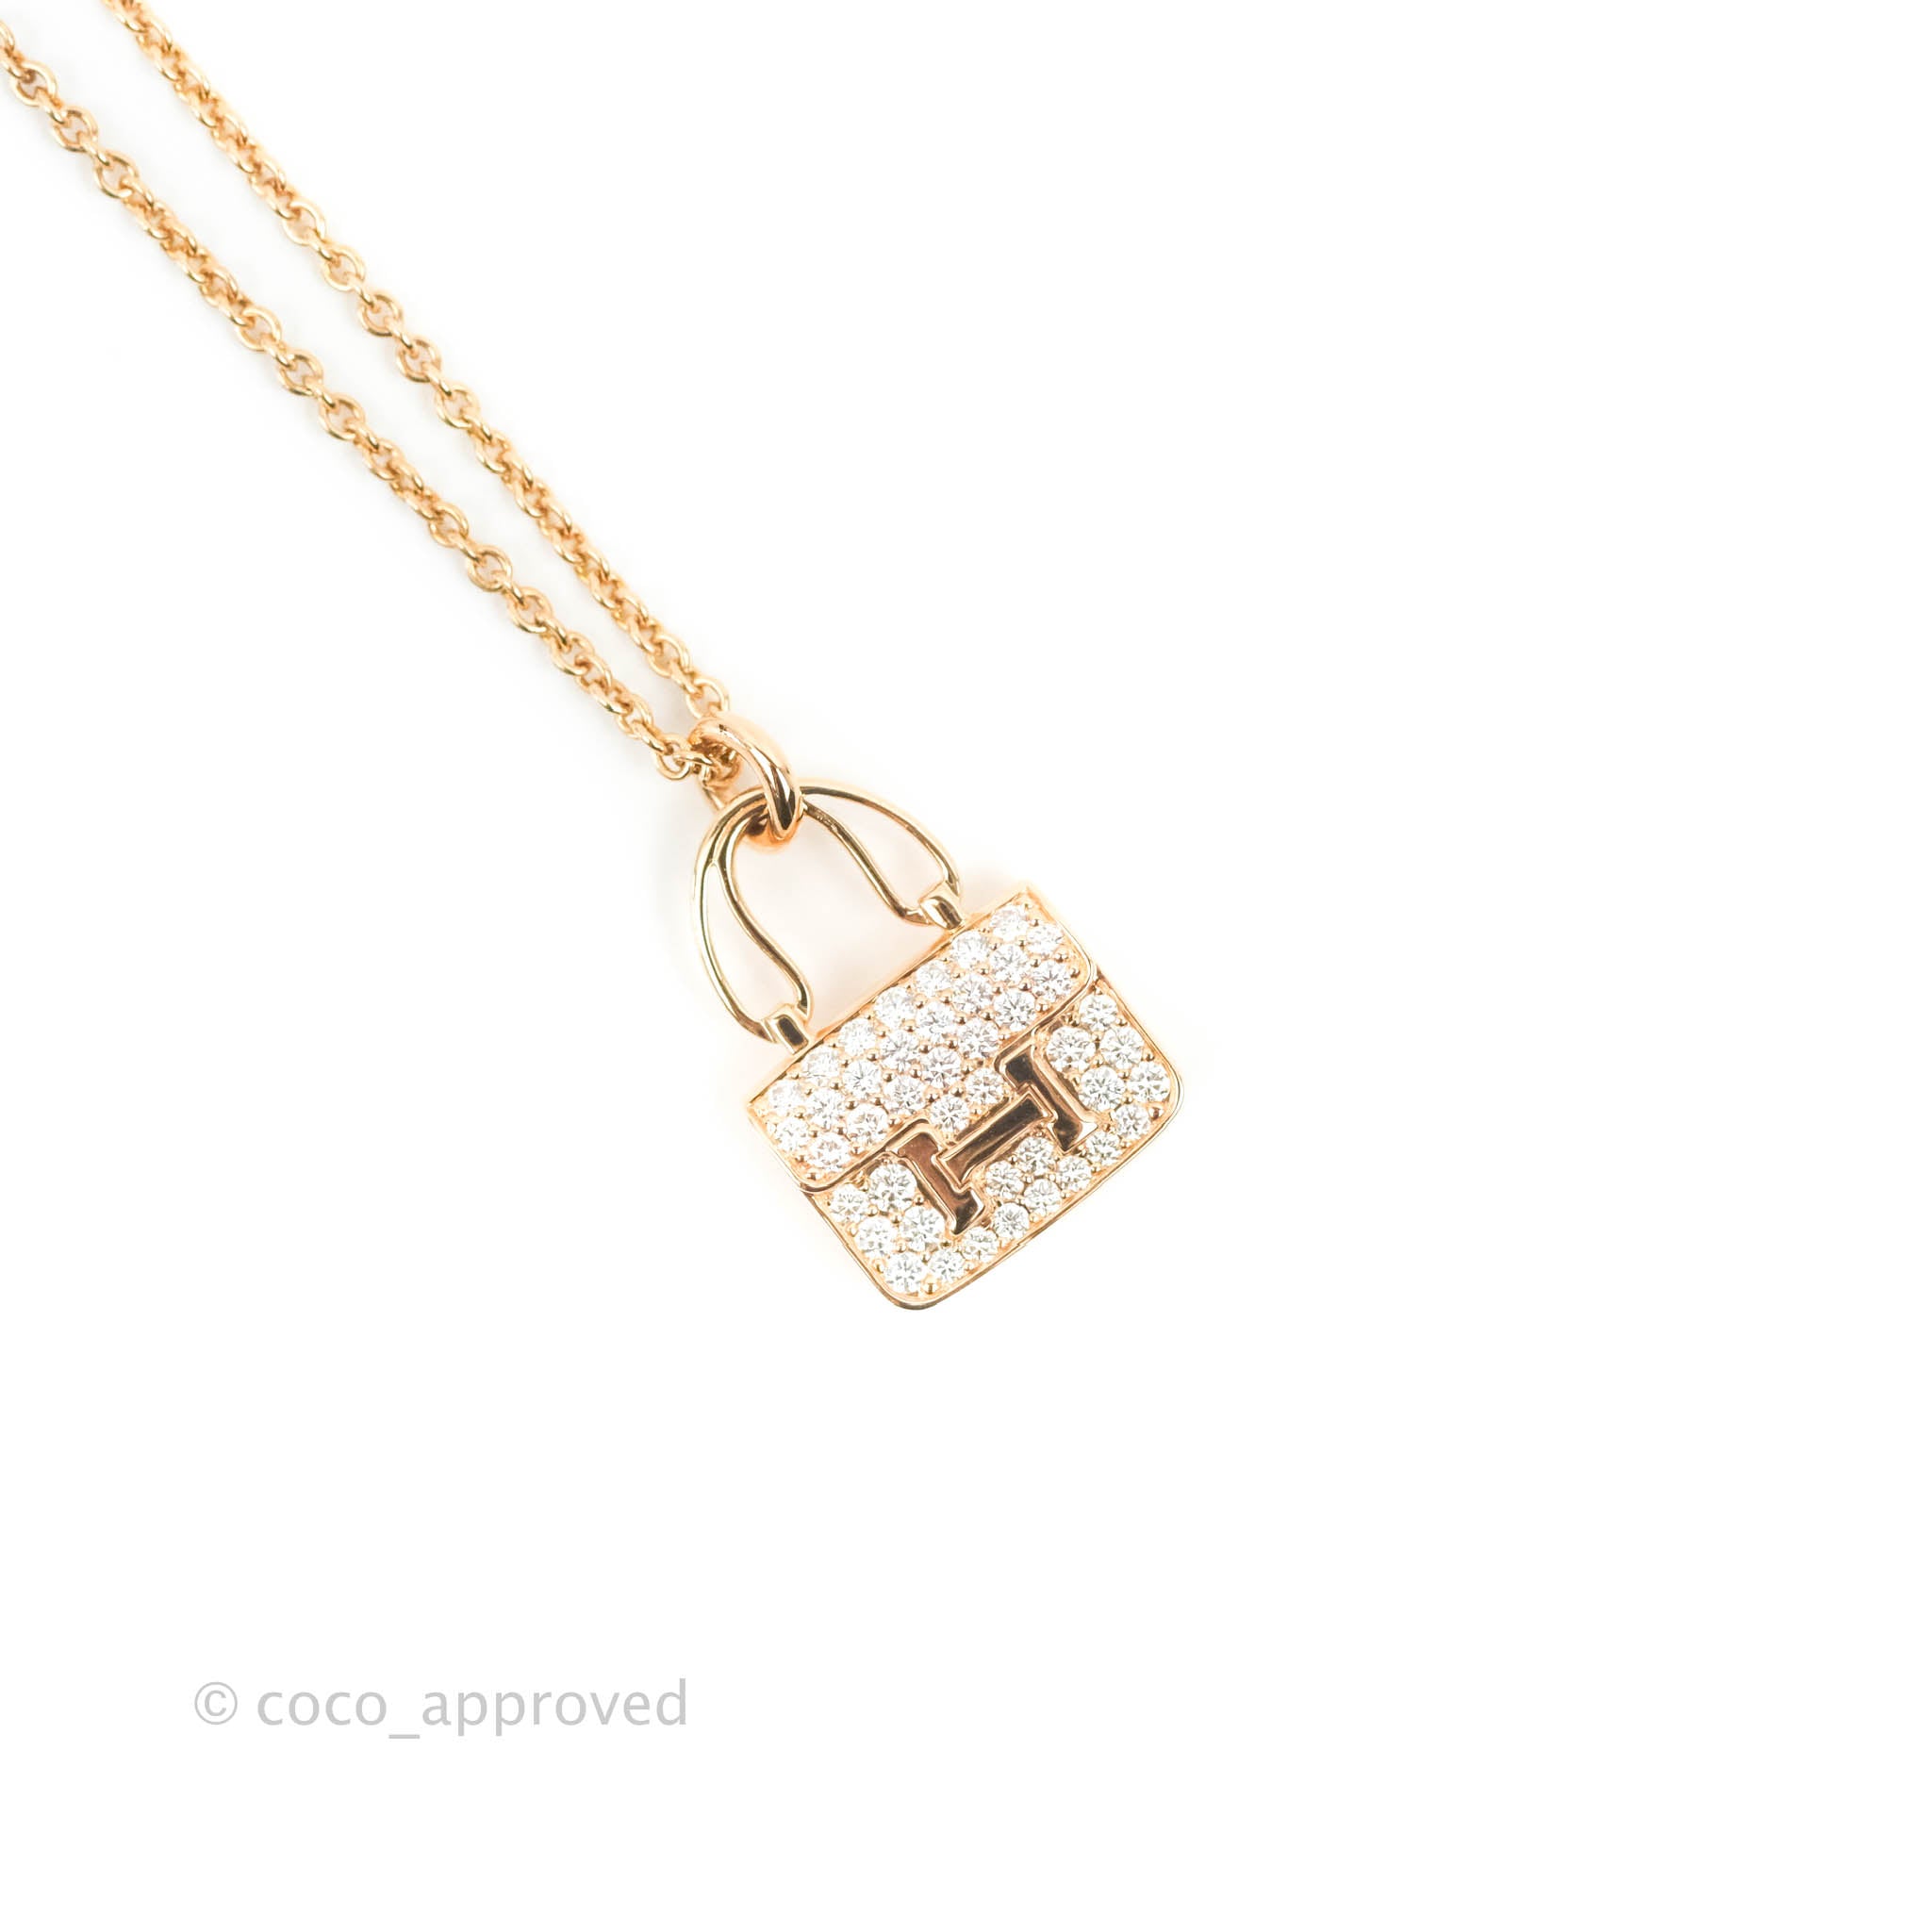 Hermes Constance Amulette Pendant Necklace 18K Rose Gold and Diamonds